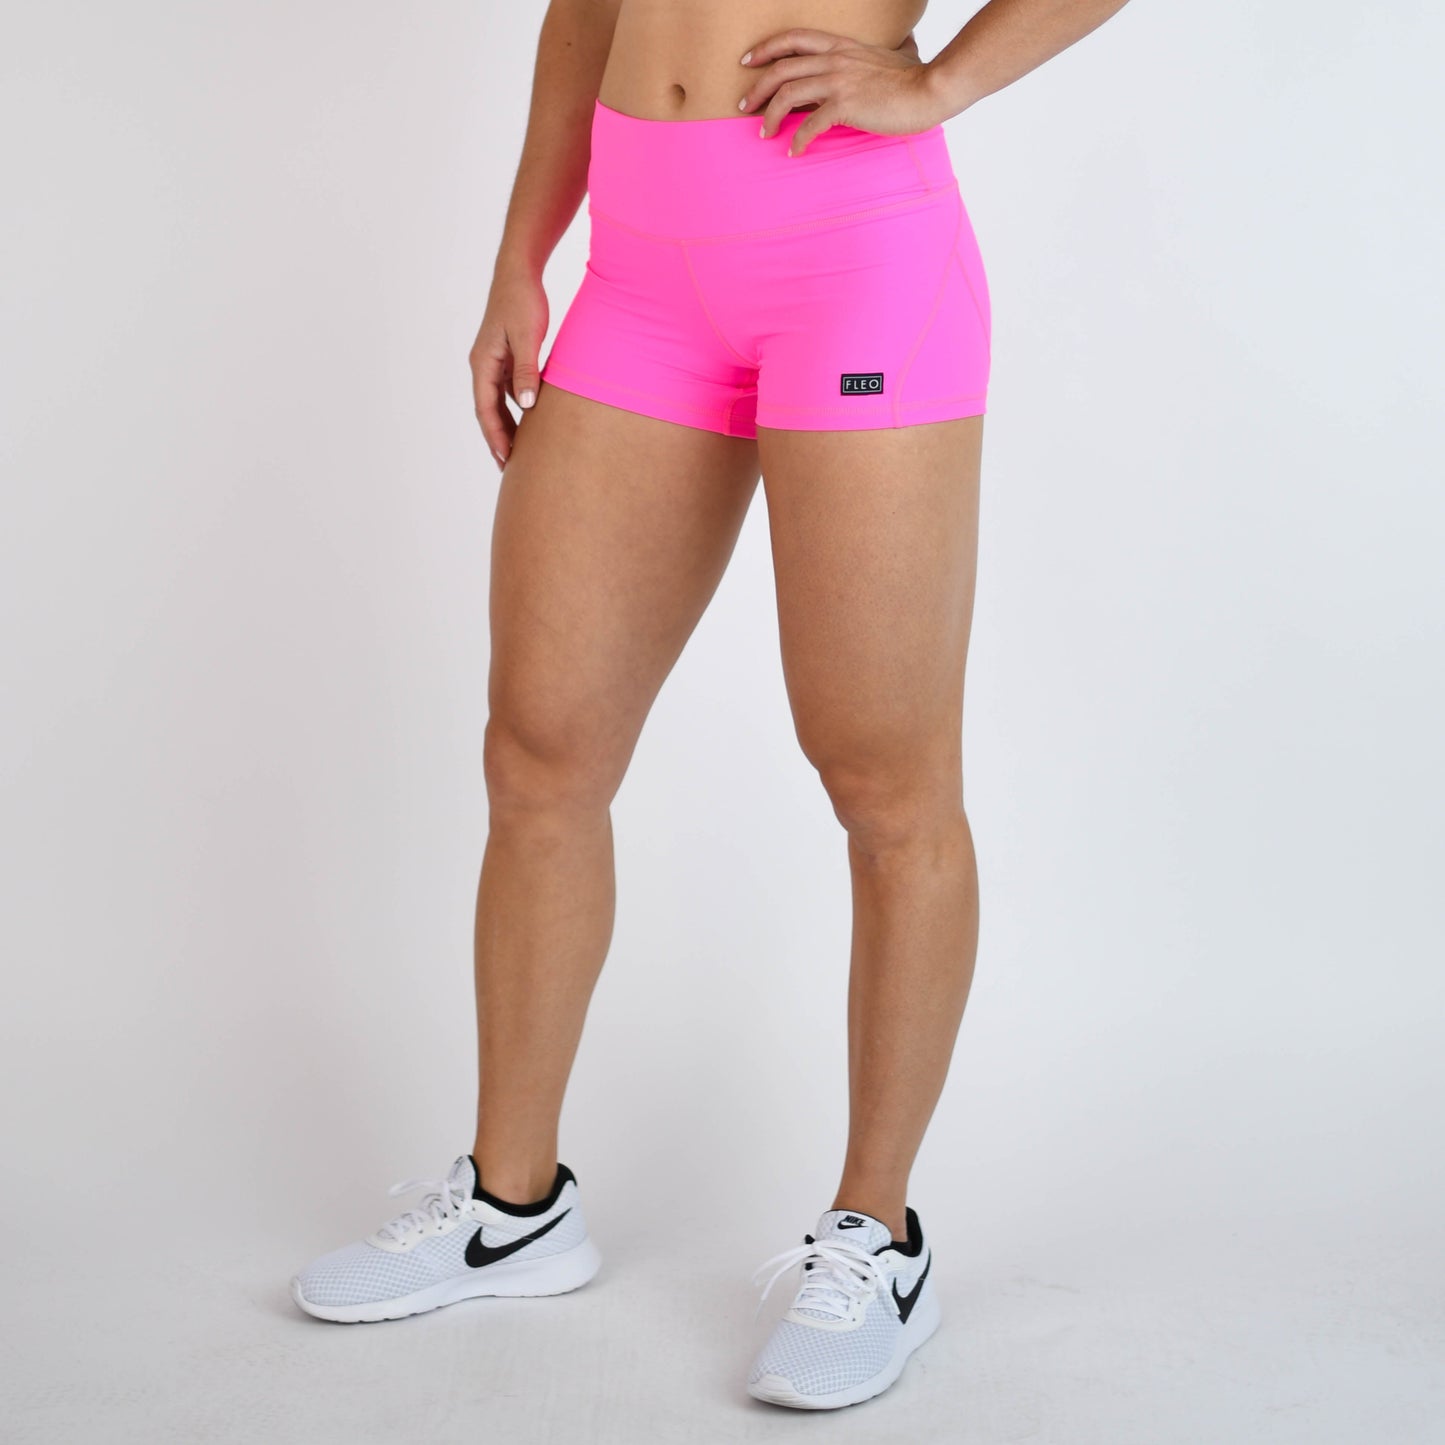 FLEO Neon Pink Shorts (Apex Contour)